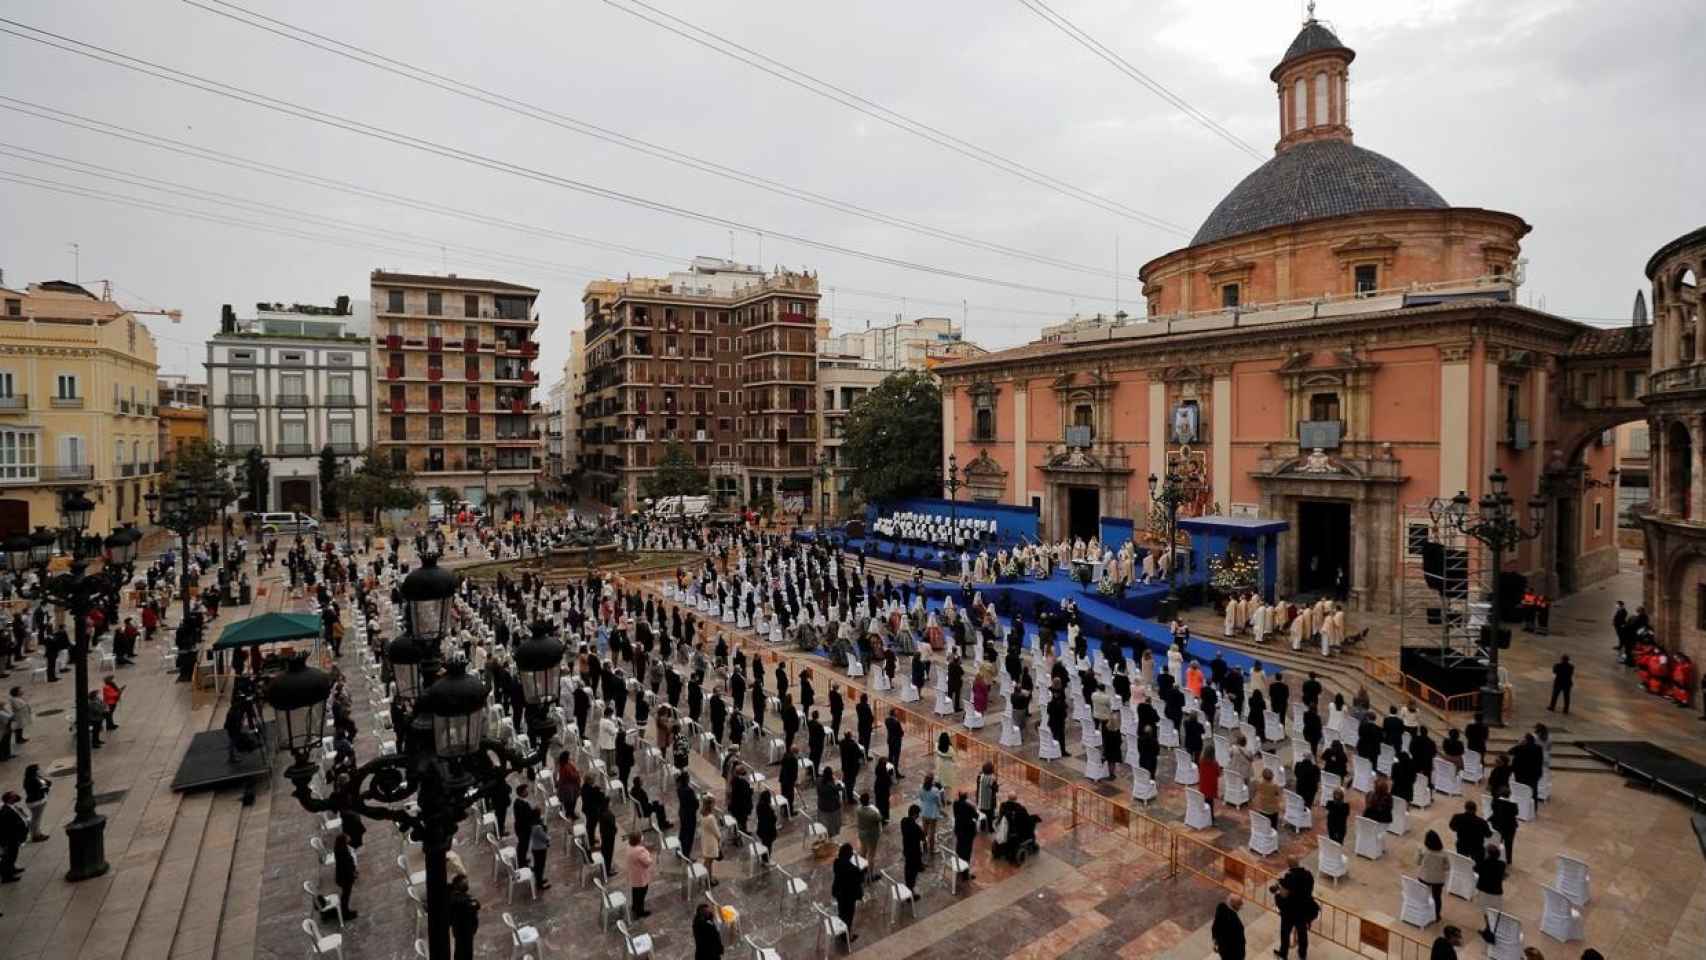 IImagen de la Missa d'Infants que se celebra en la Plaza de la Virgen de Valencia.